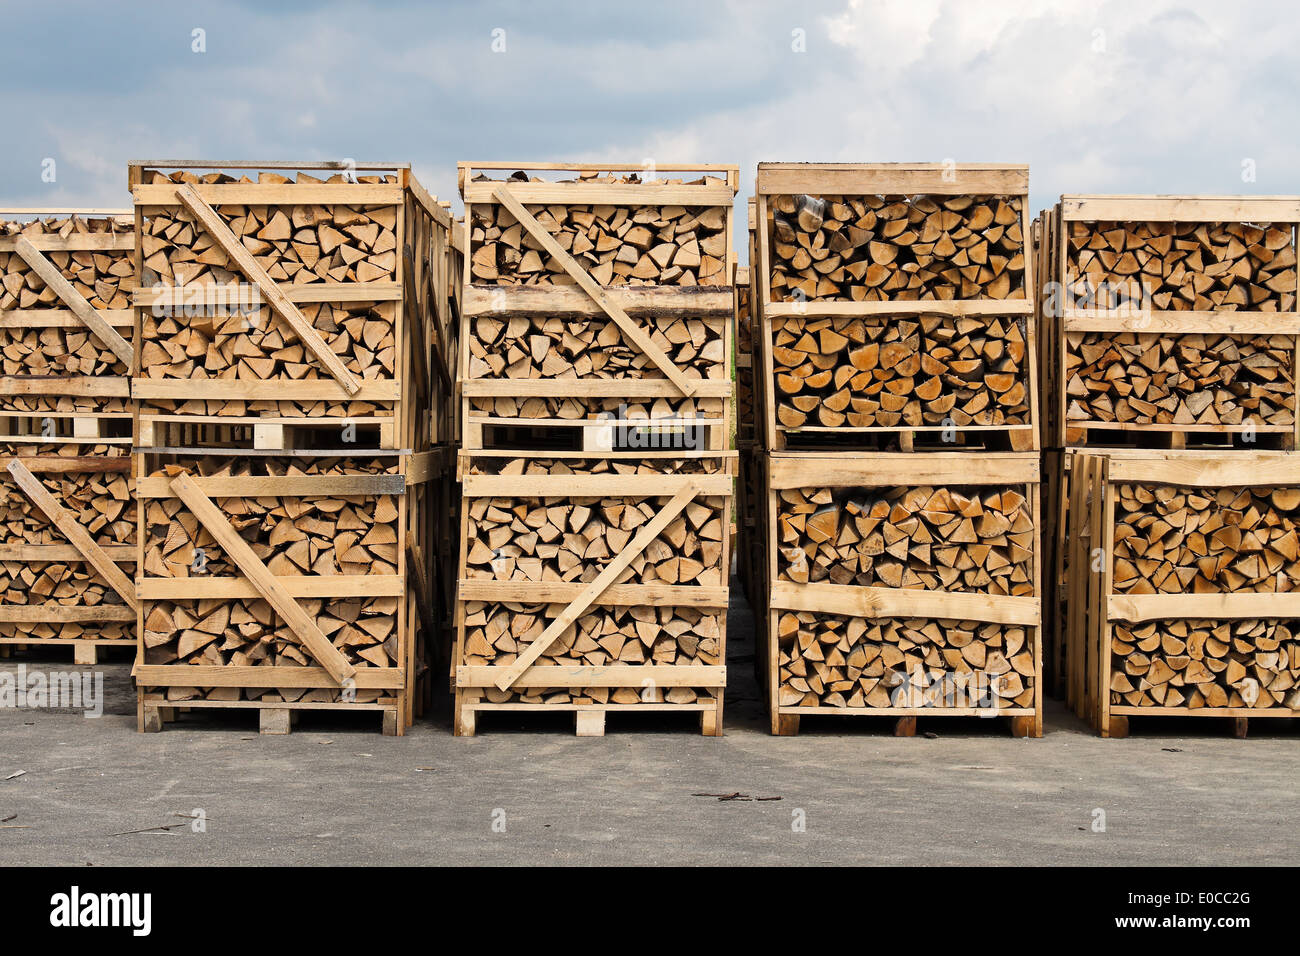 Un gran montón de madera para leña en un lugar de descanso, Ein grosser Holz Stapel fuer Brennholz auf einem Lagerplatz Foto de stock